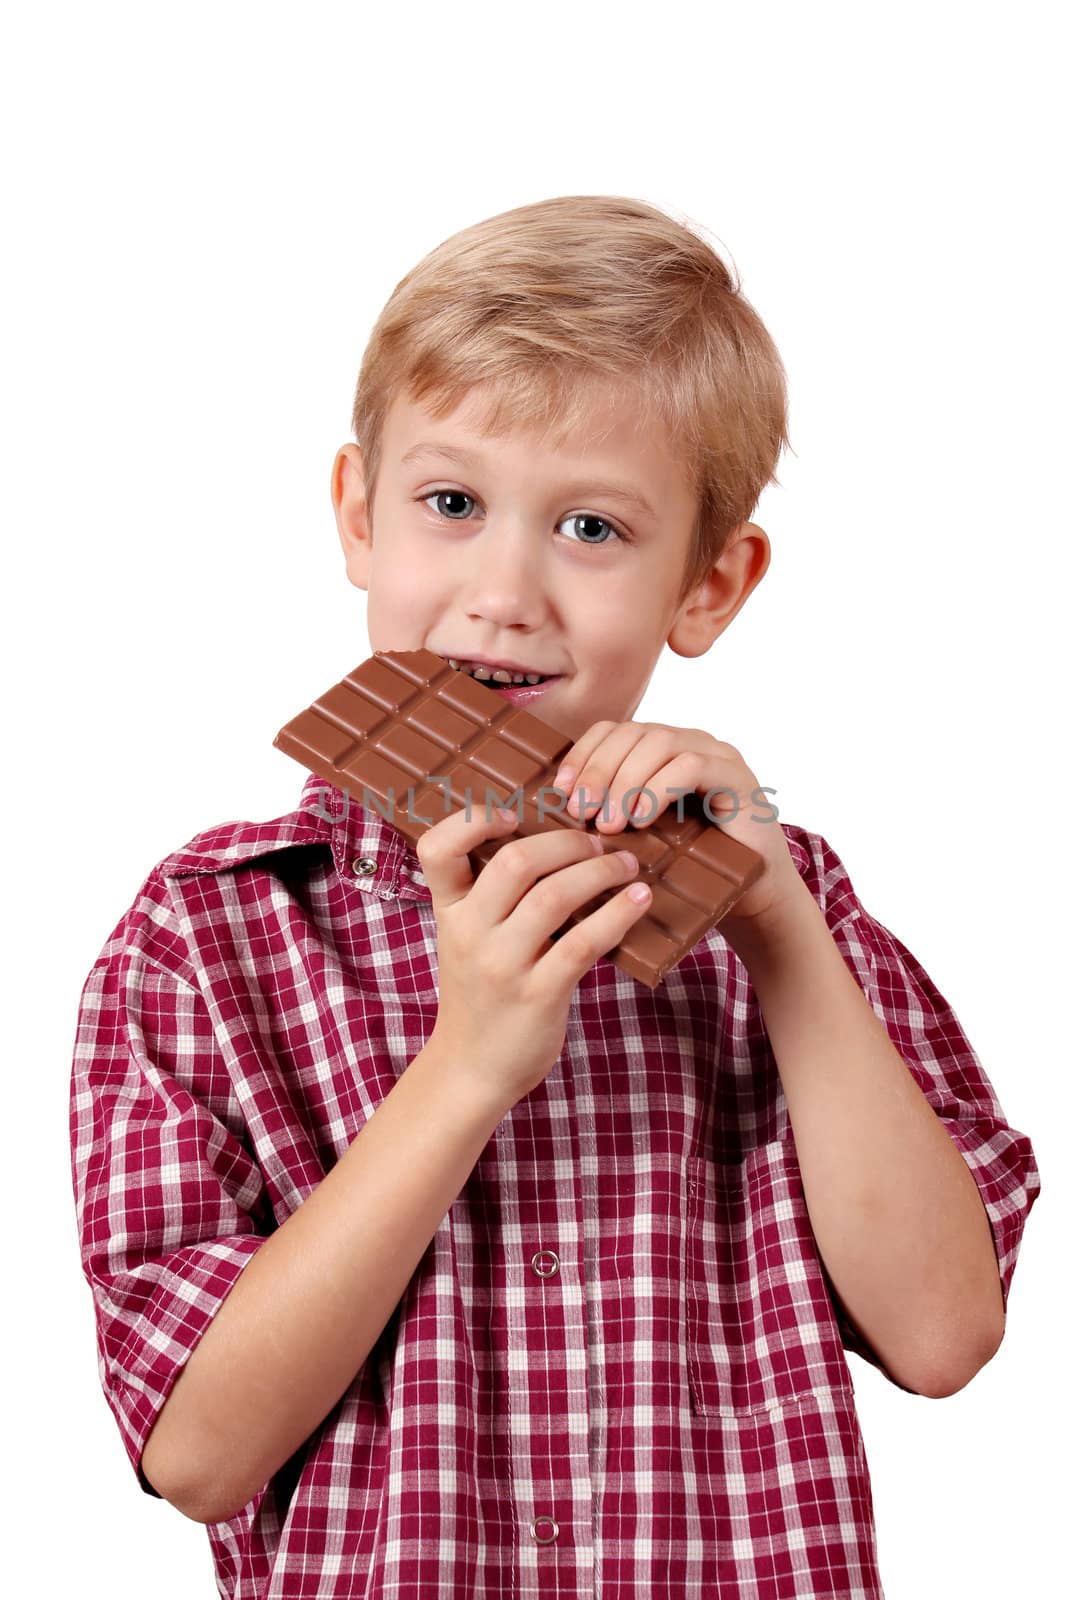 boy eats chocolate by goce